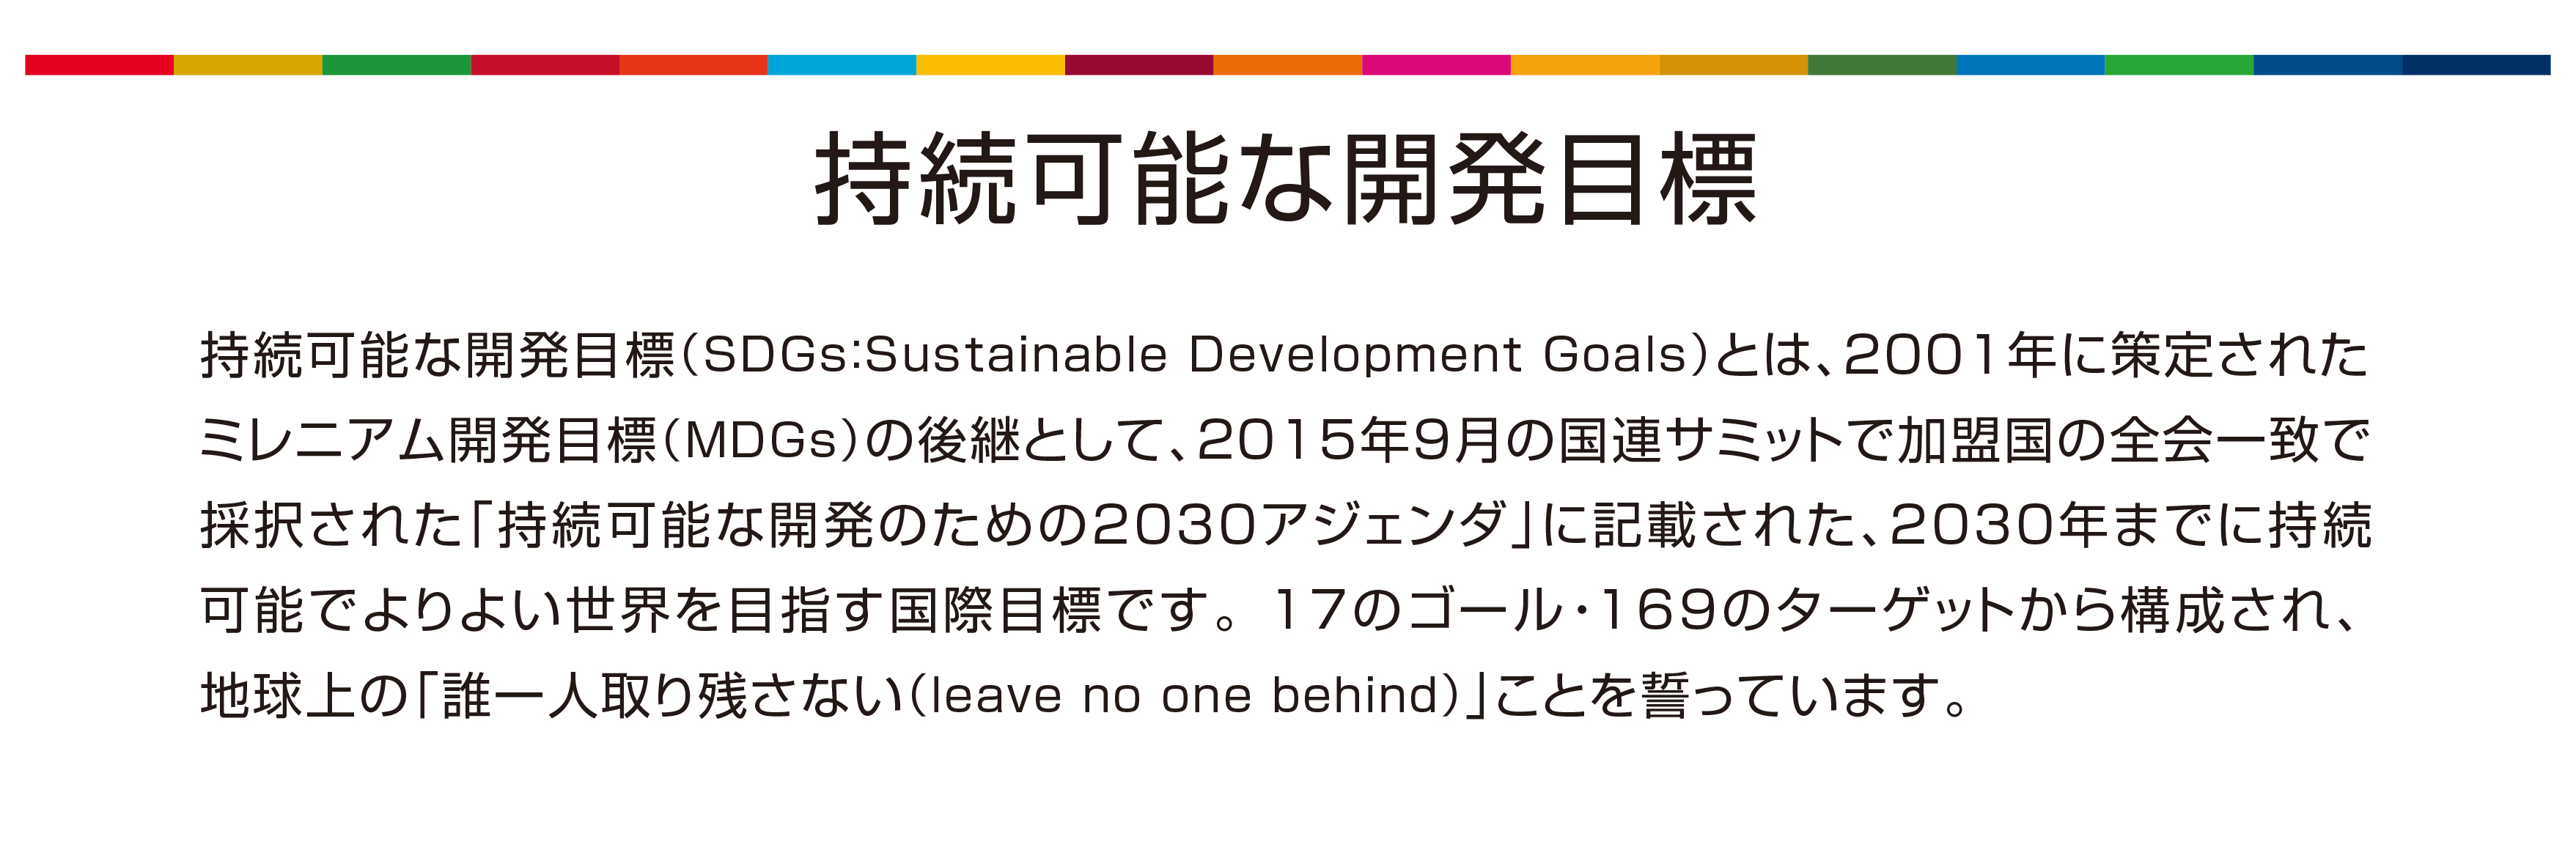 SDGs_2.jpg